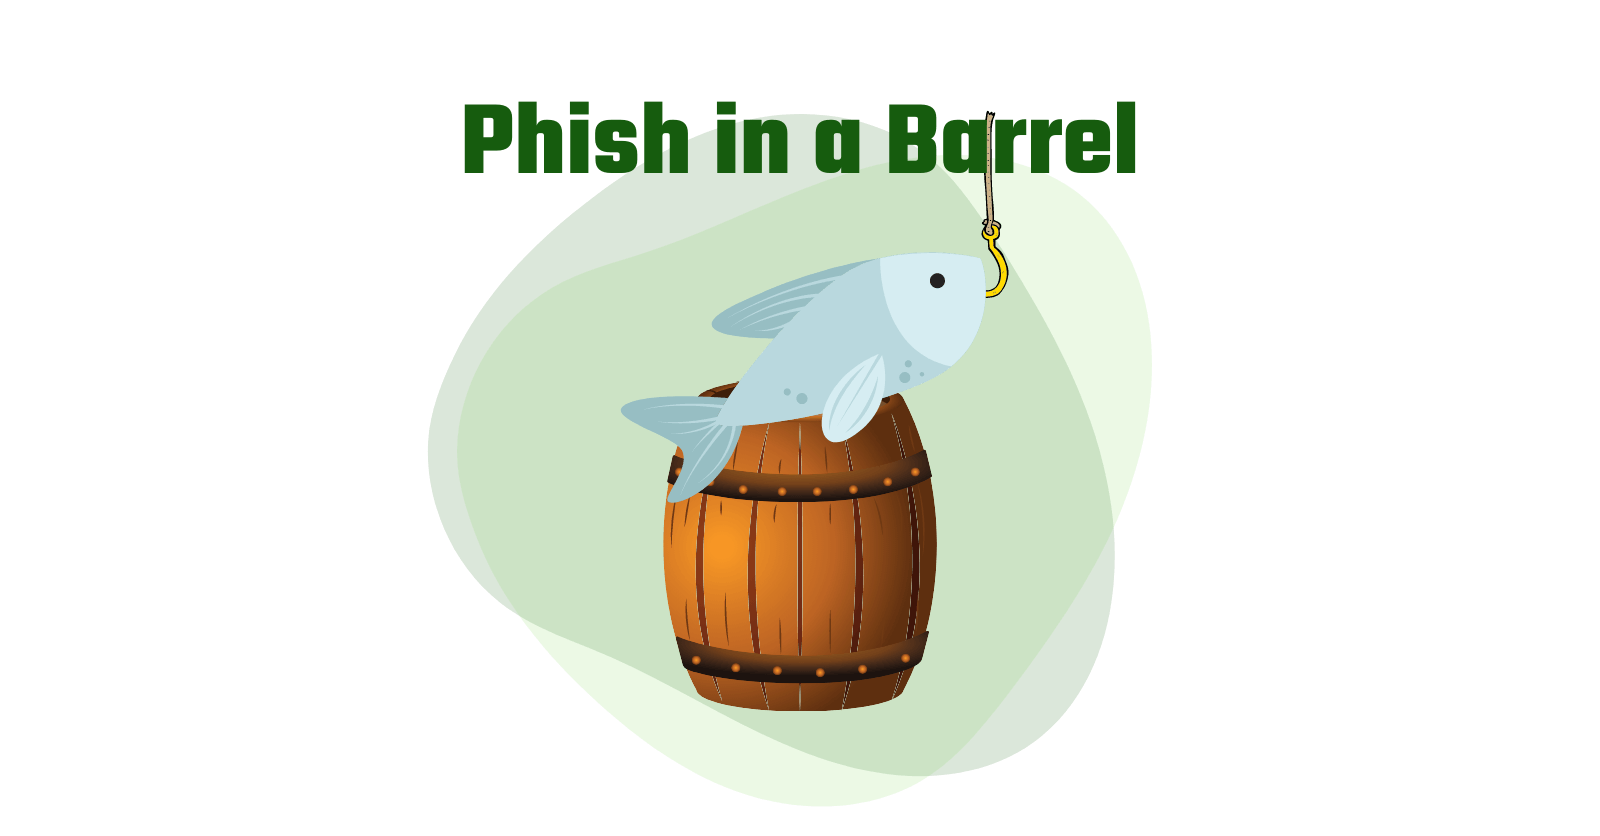 Phish in a Barrel